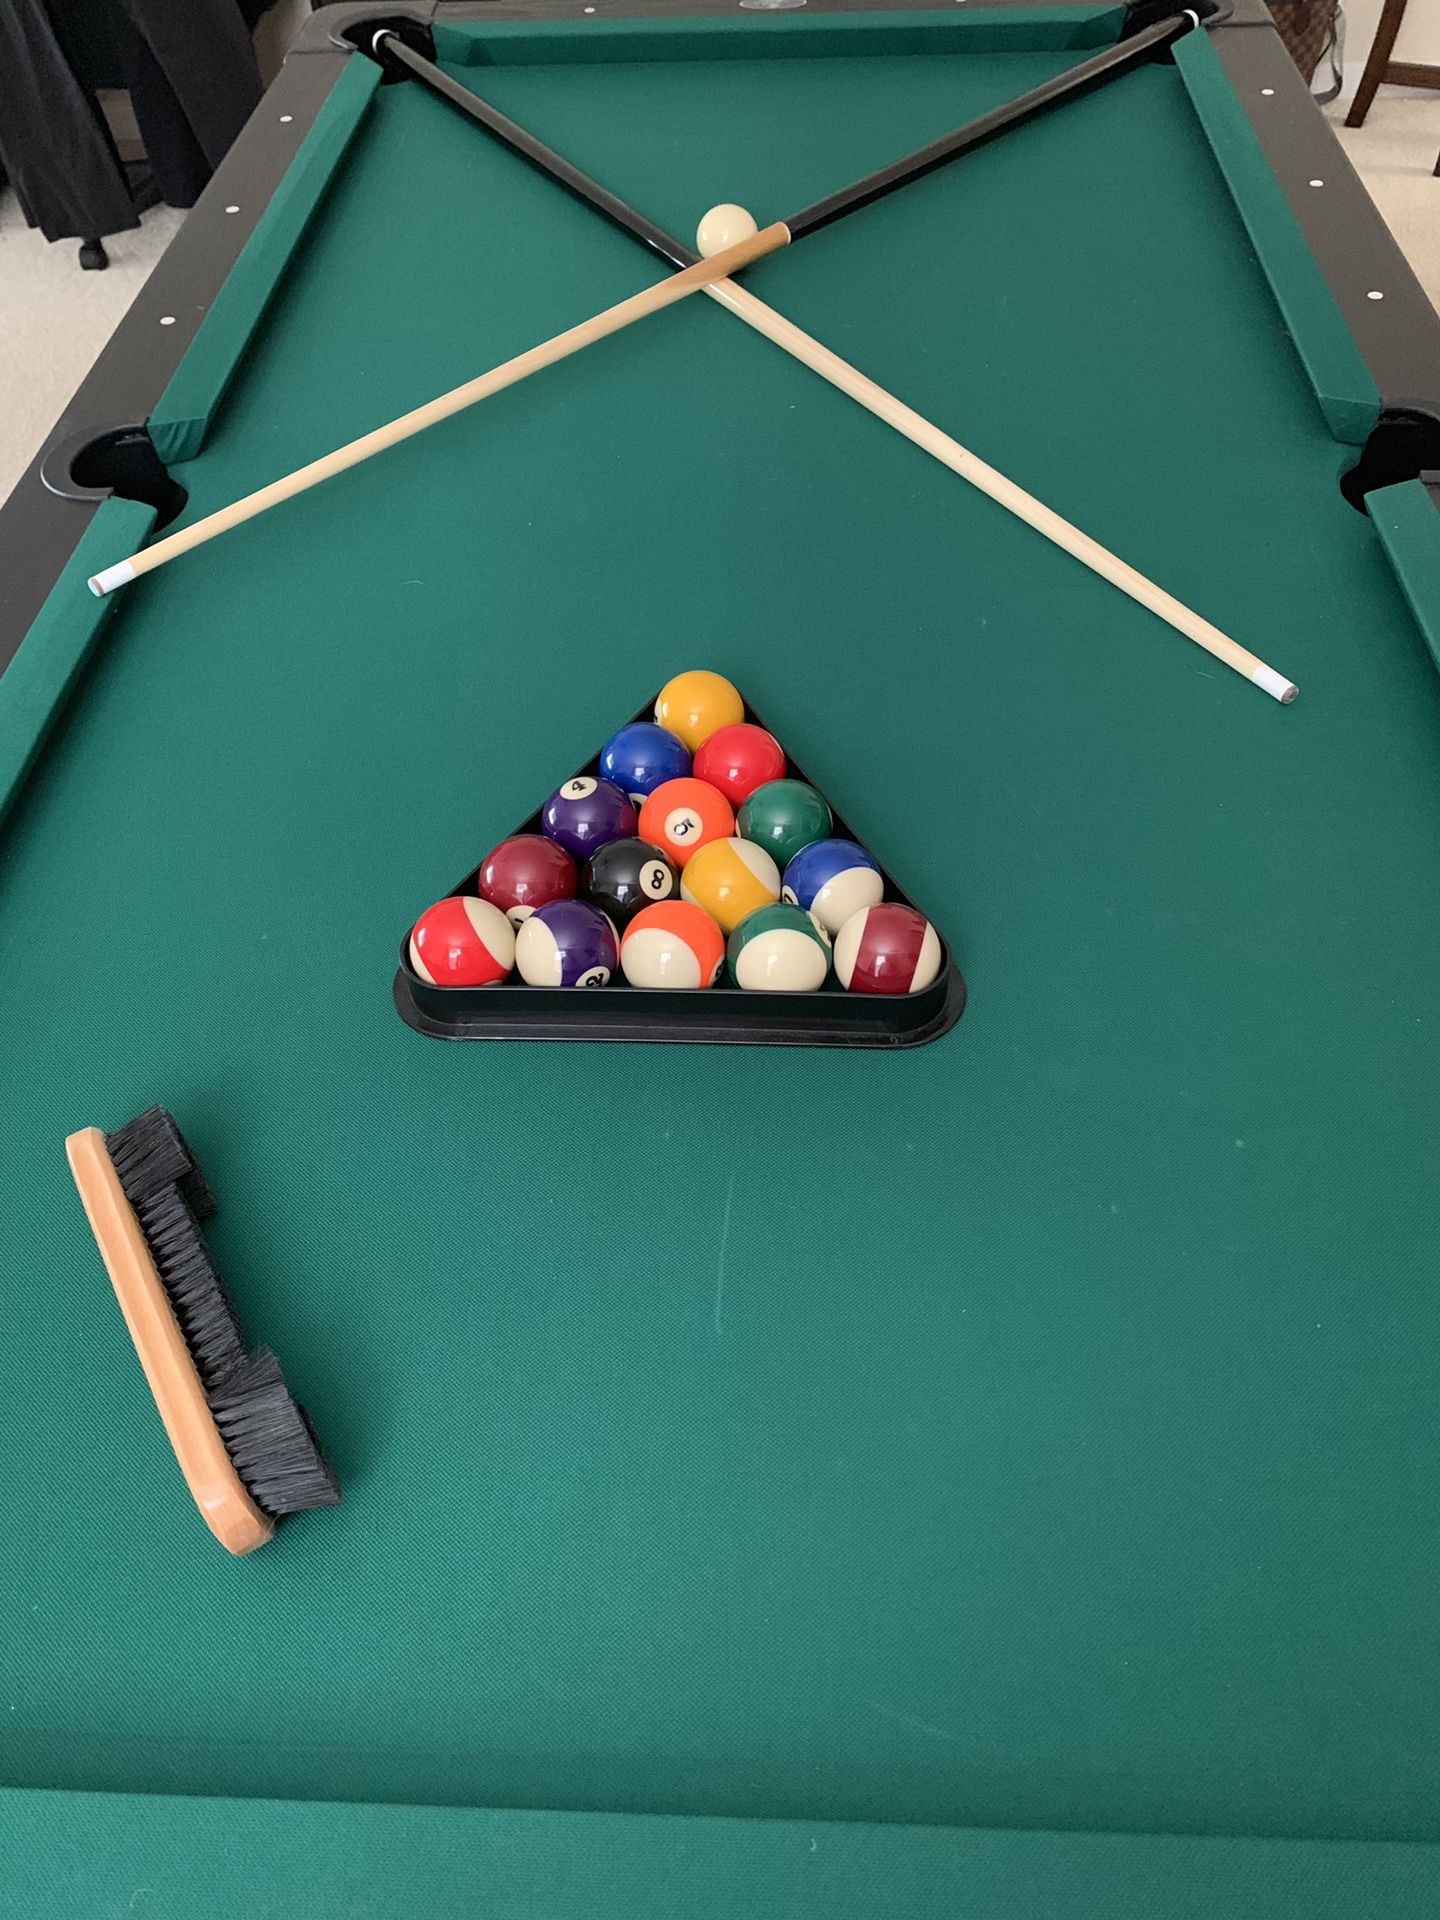 FatCat Pockey Table: Billiards/Air Hockey/Table Tennis All in One